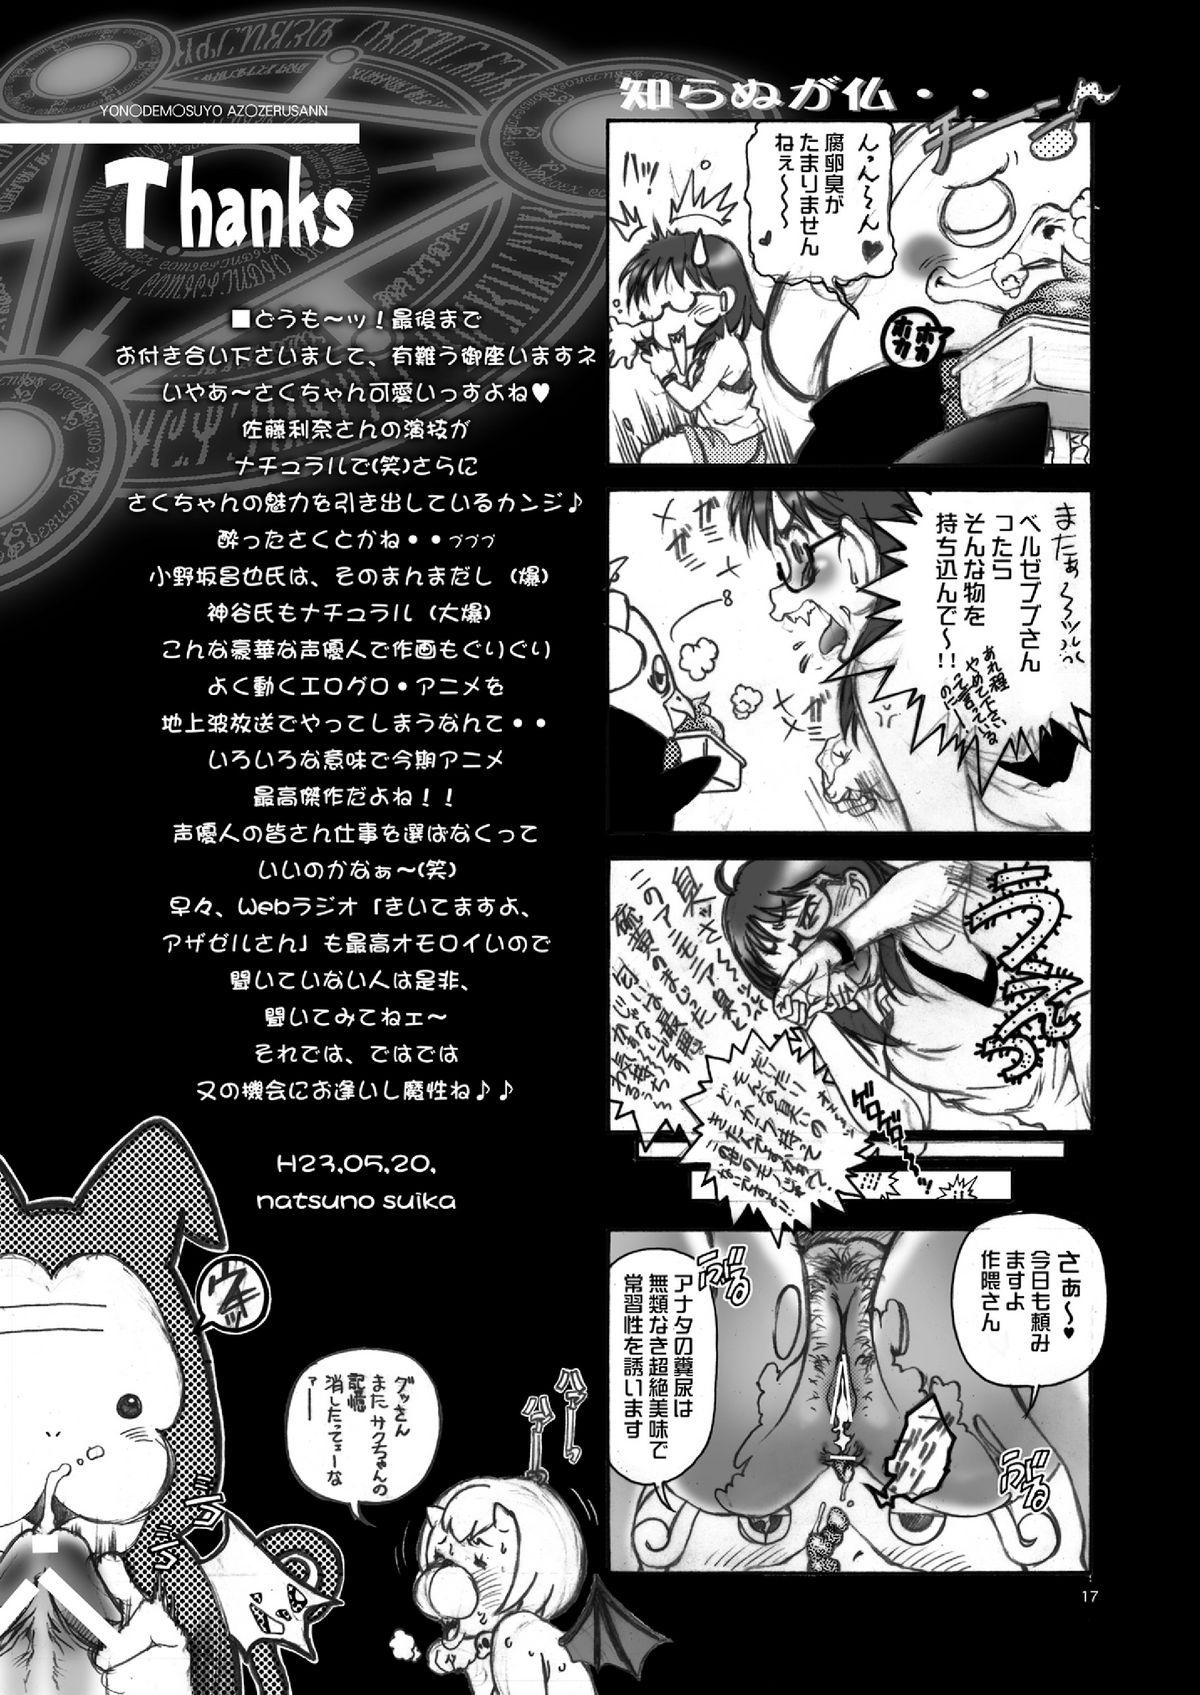 Fit Ittemasuyo! Saku-chan. - Yondemasuyo azazel san Art - Page 17